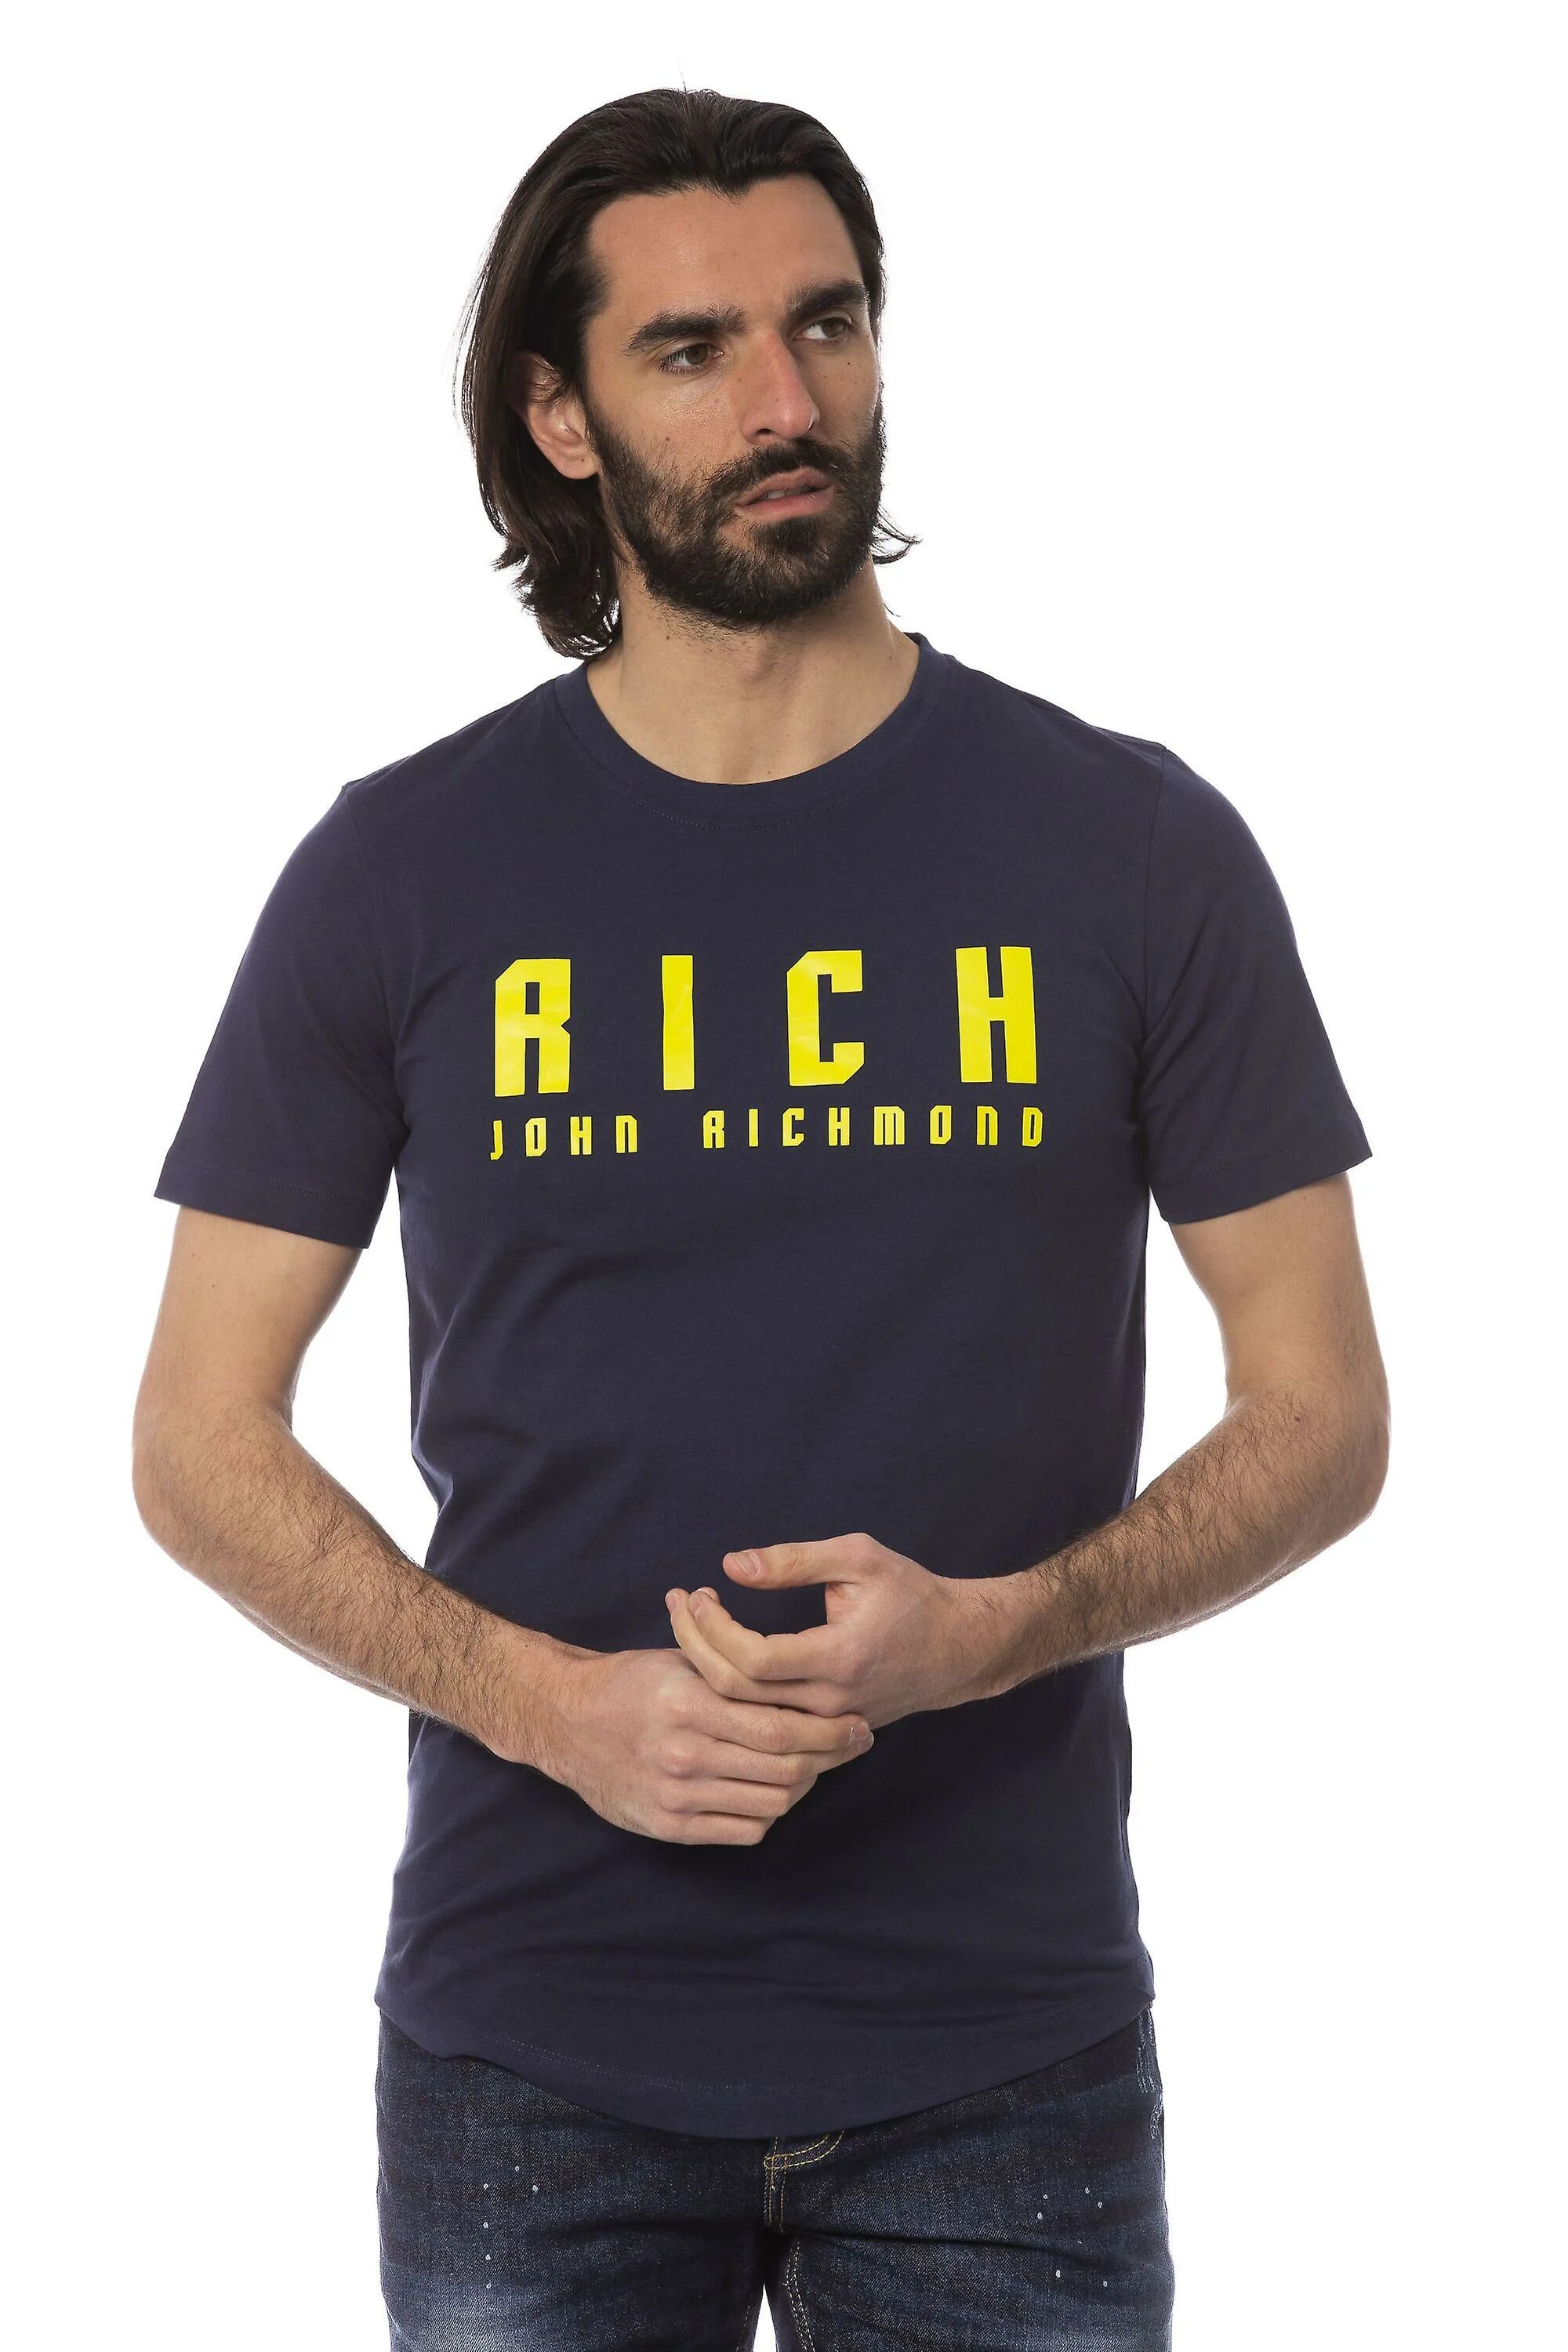 John Richmond футболка. Майка Джон Ричмонд мужская. Джон Ричмонд футболка мужская. Richmond майка мужская. Richmond man